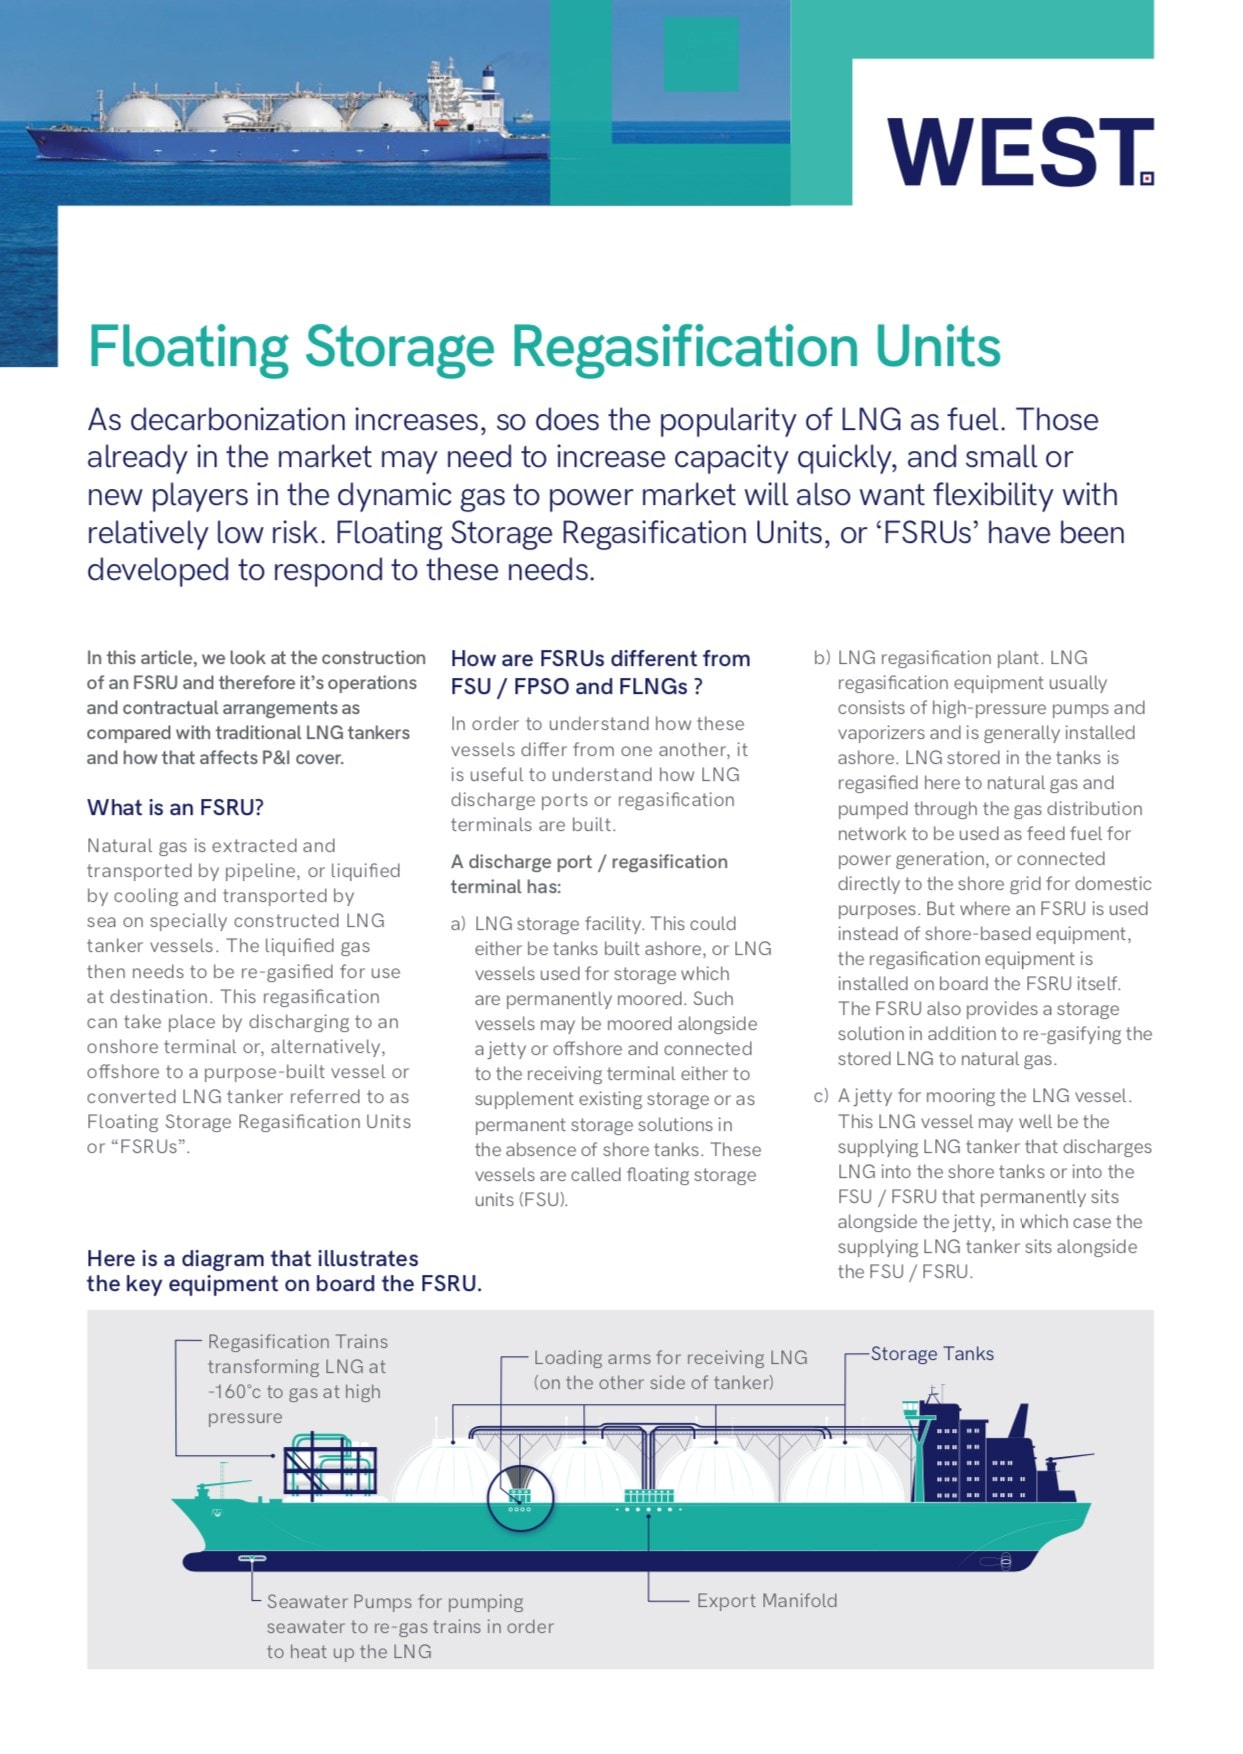 Floating-storage-regasification-image-copy